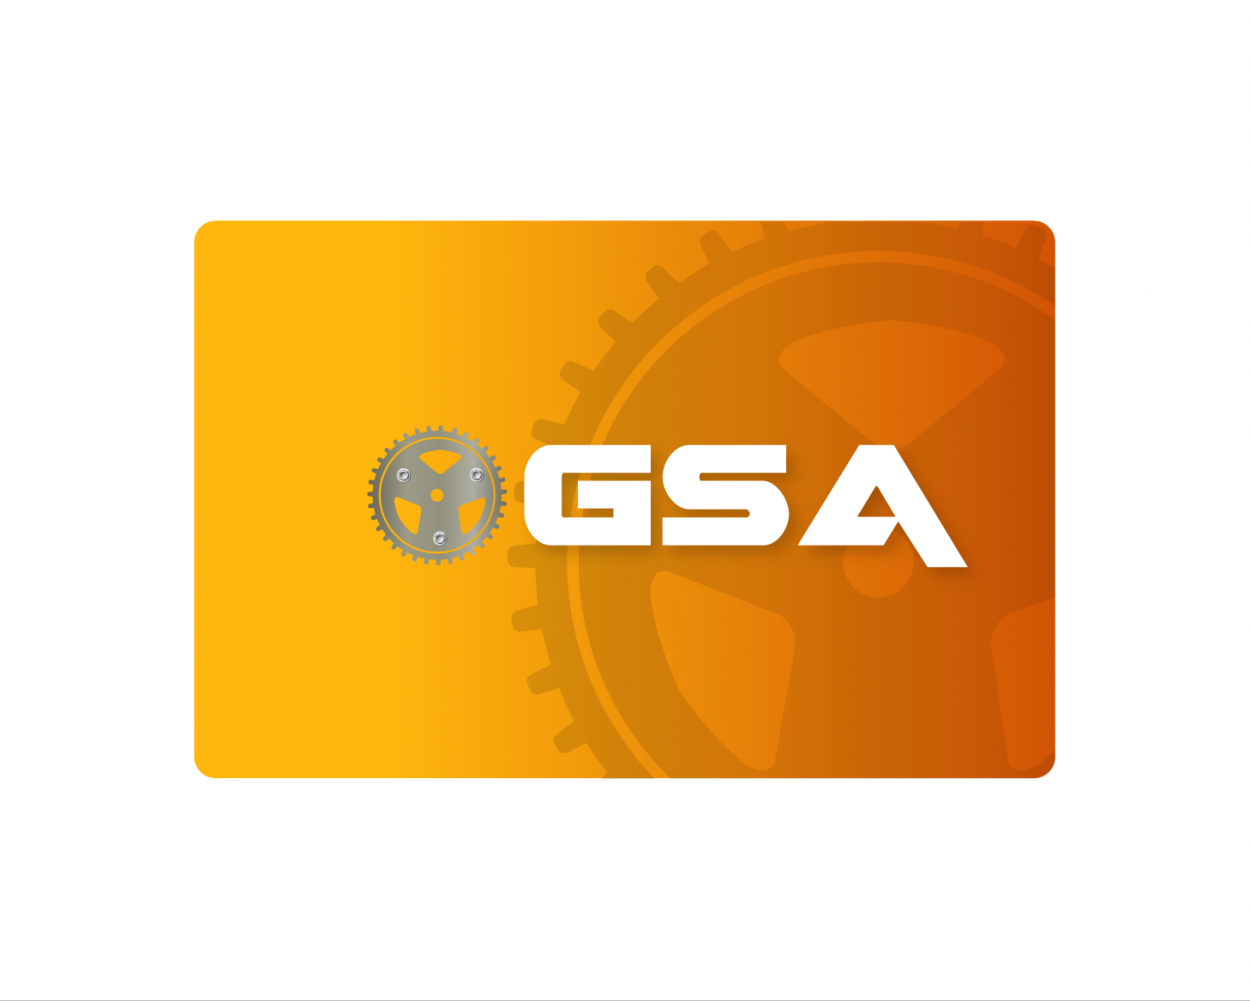 Business Card & Stationery Design entry 772870 submitted by crissgee to the Business Card & Stationery Design for GSA run by gsafertigung